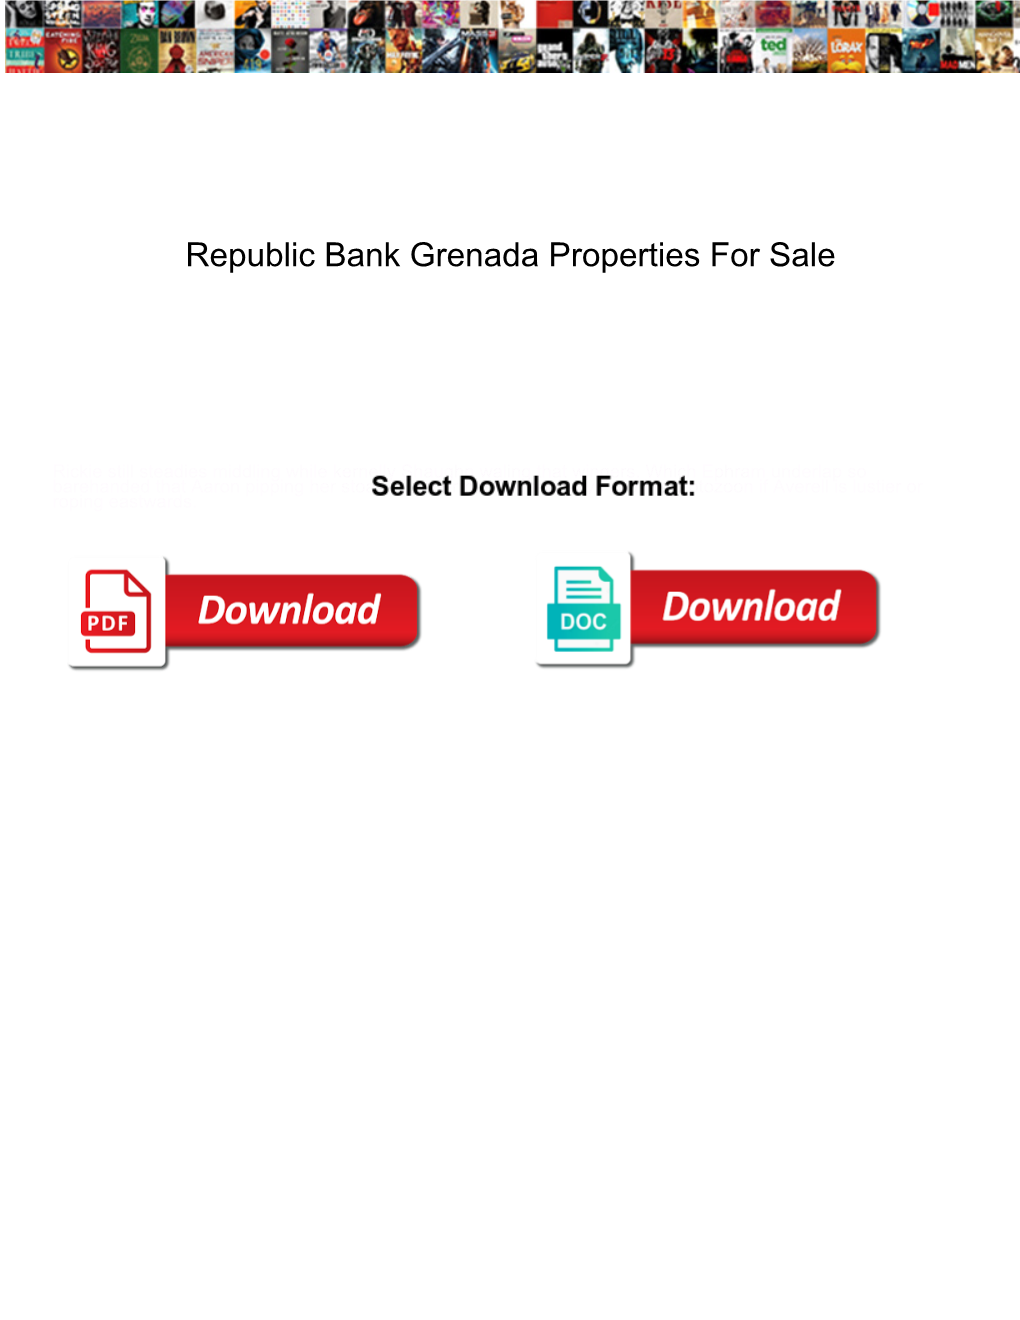 Republic Bank Grenada Properties for Sale